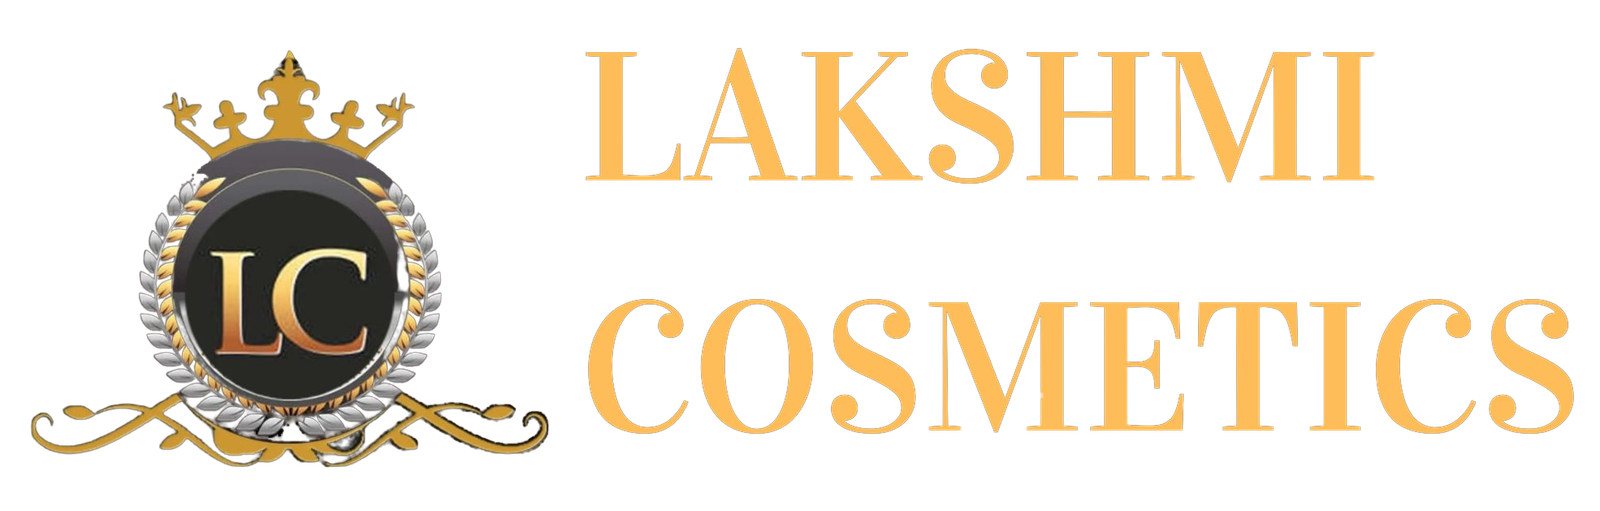 Lakshmi Cosmetics